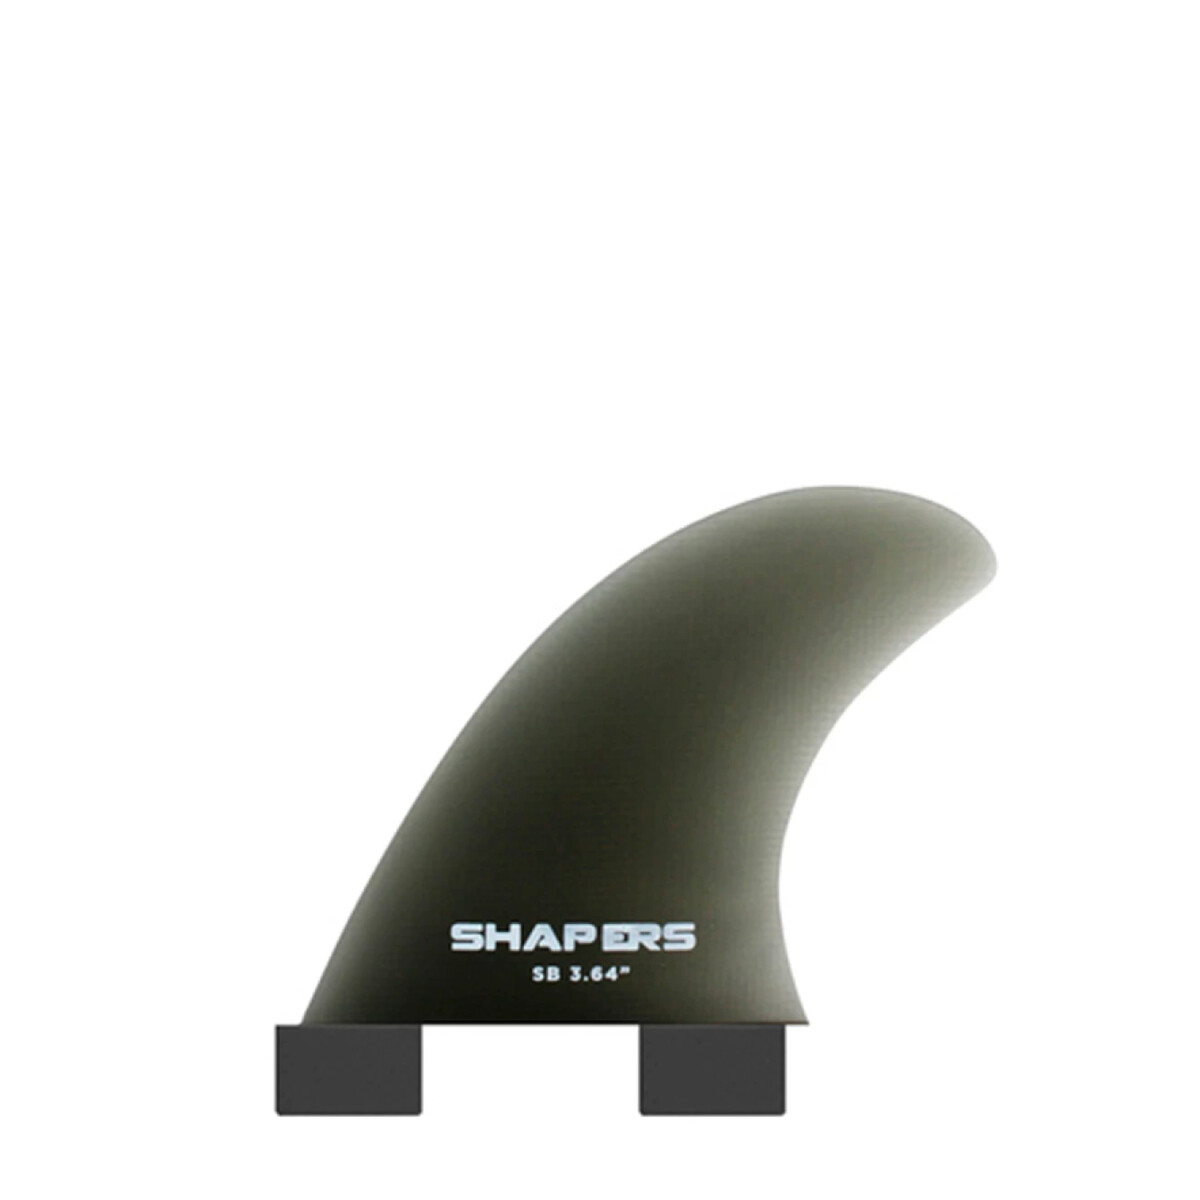 Quilla Shapers Classic Side Bites - 3.64” Transparent Black FCS 